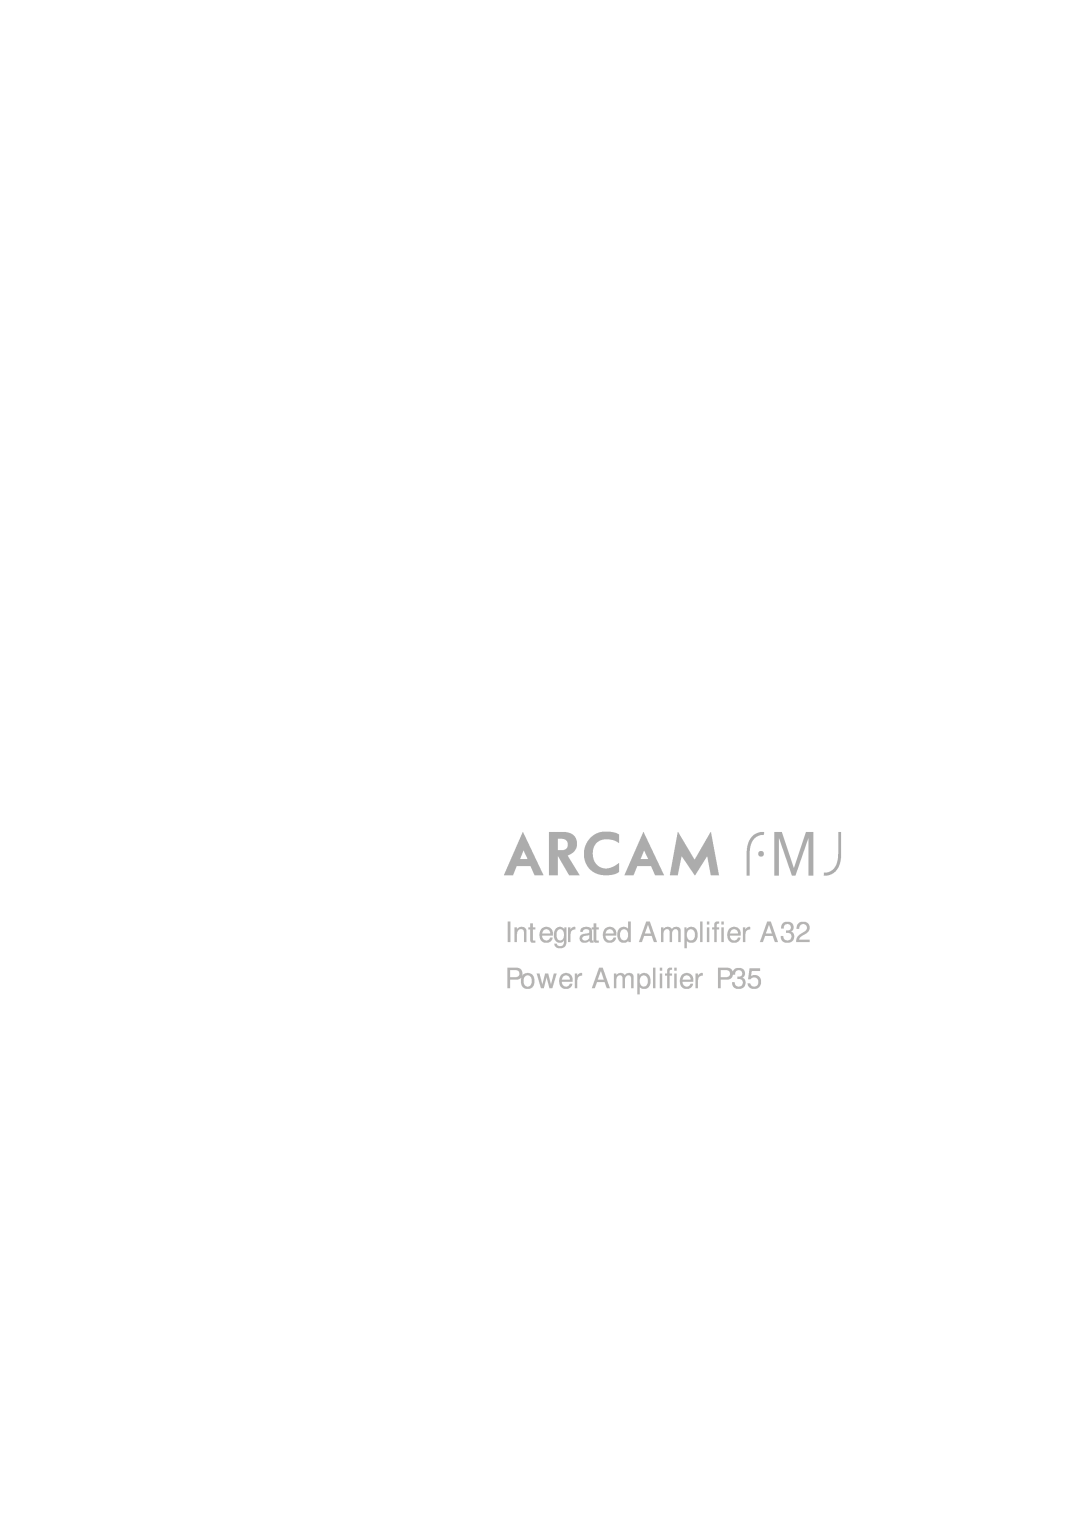 Arcam manual Pre Amplifier C30 Power Amplifier P35, Power Amplifier P1, Vorverstärker C30 Vollverstärker P35 